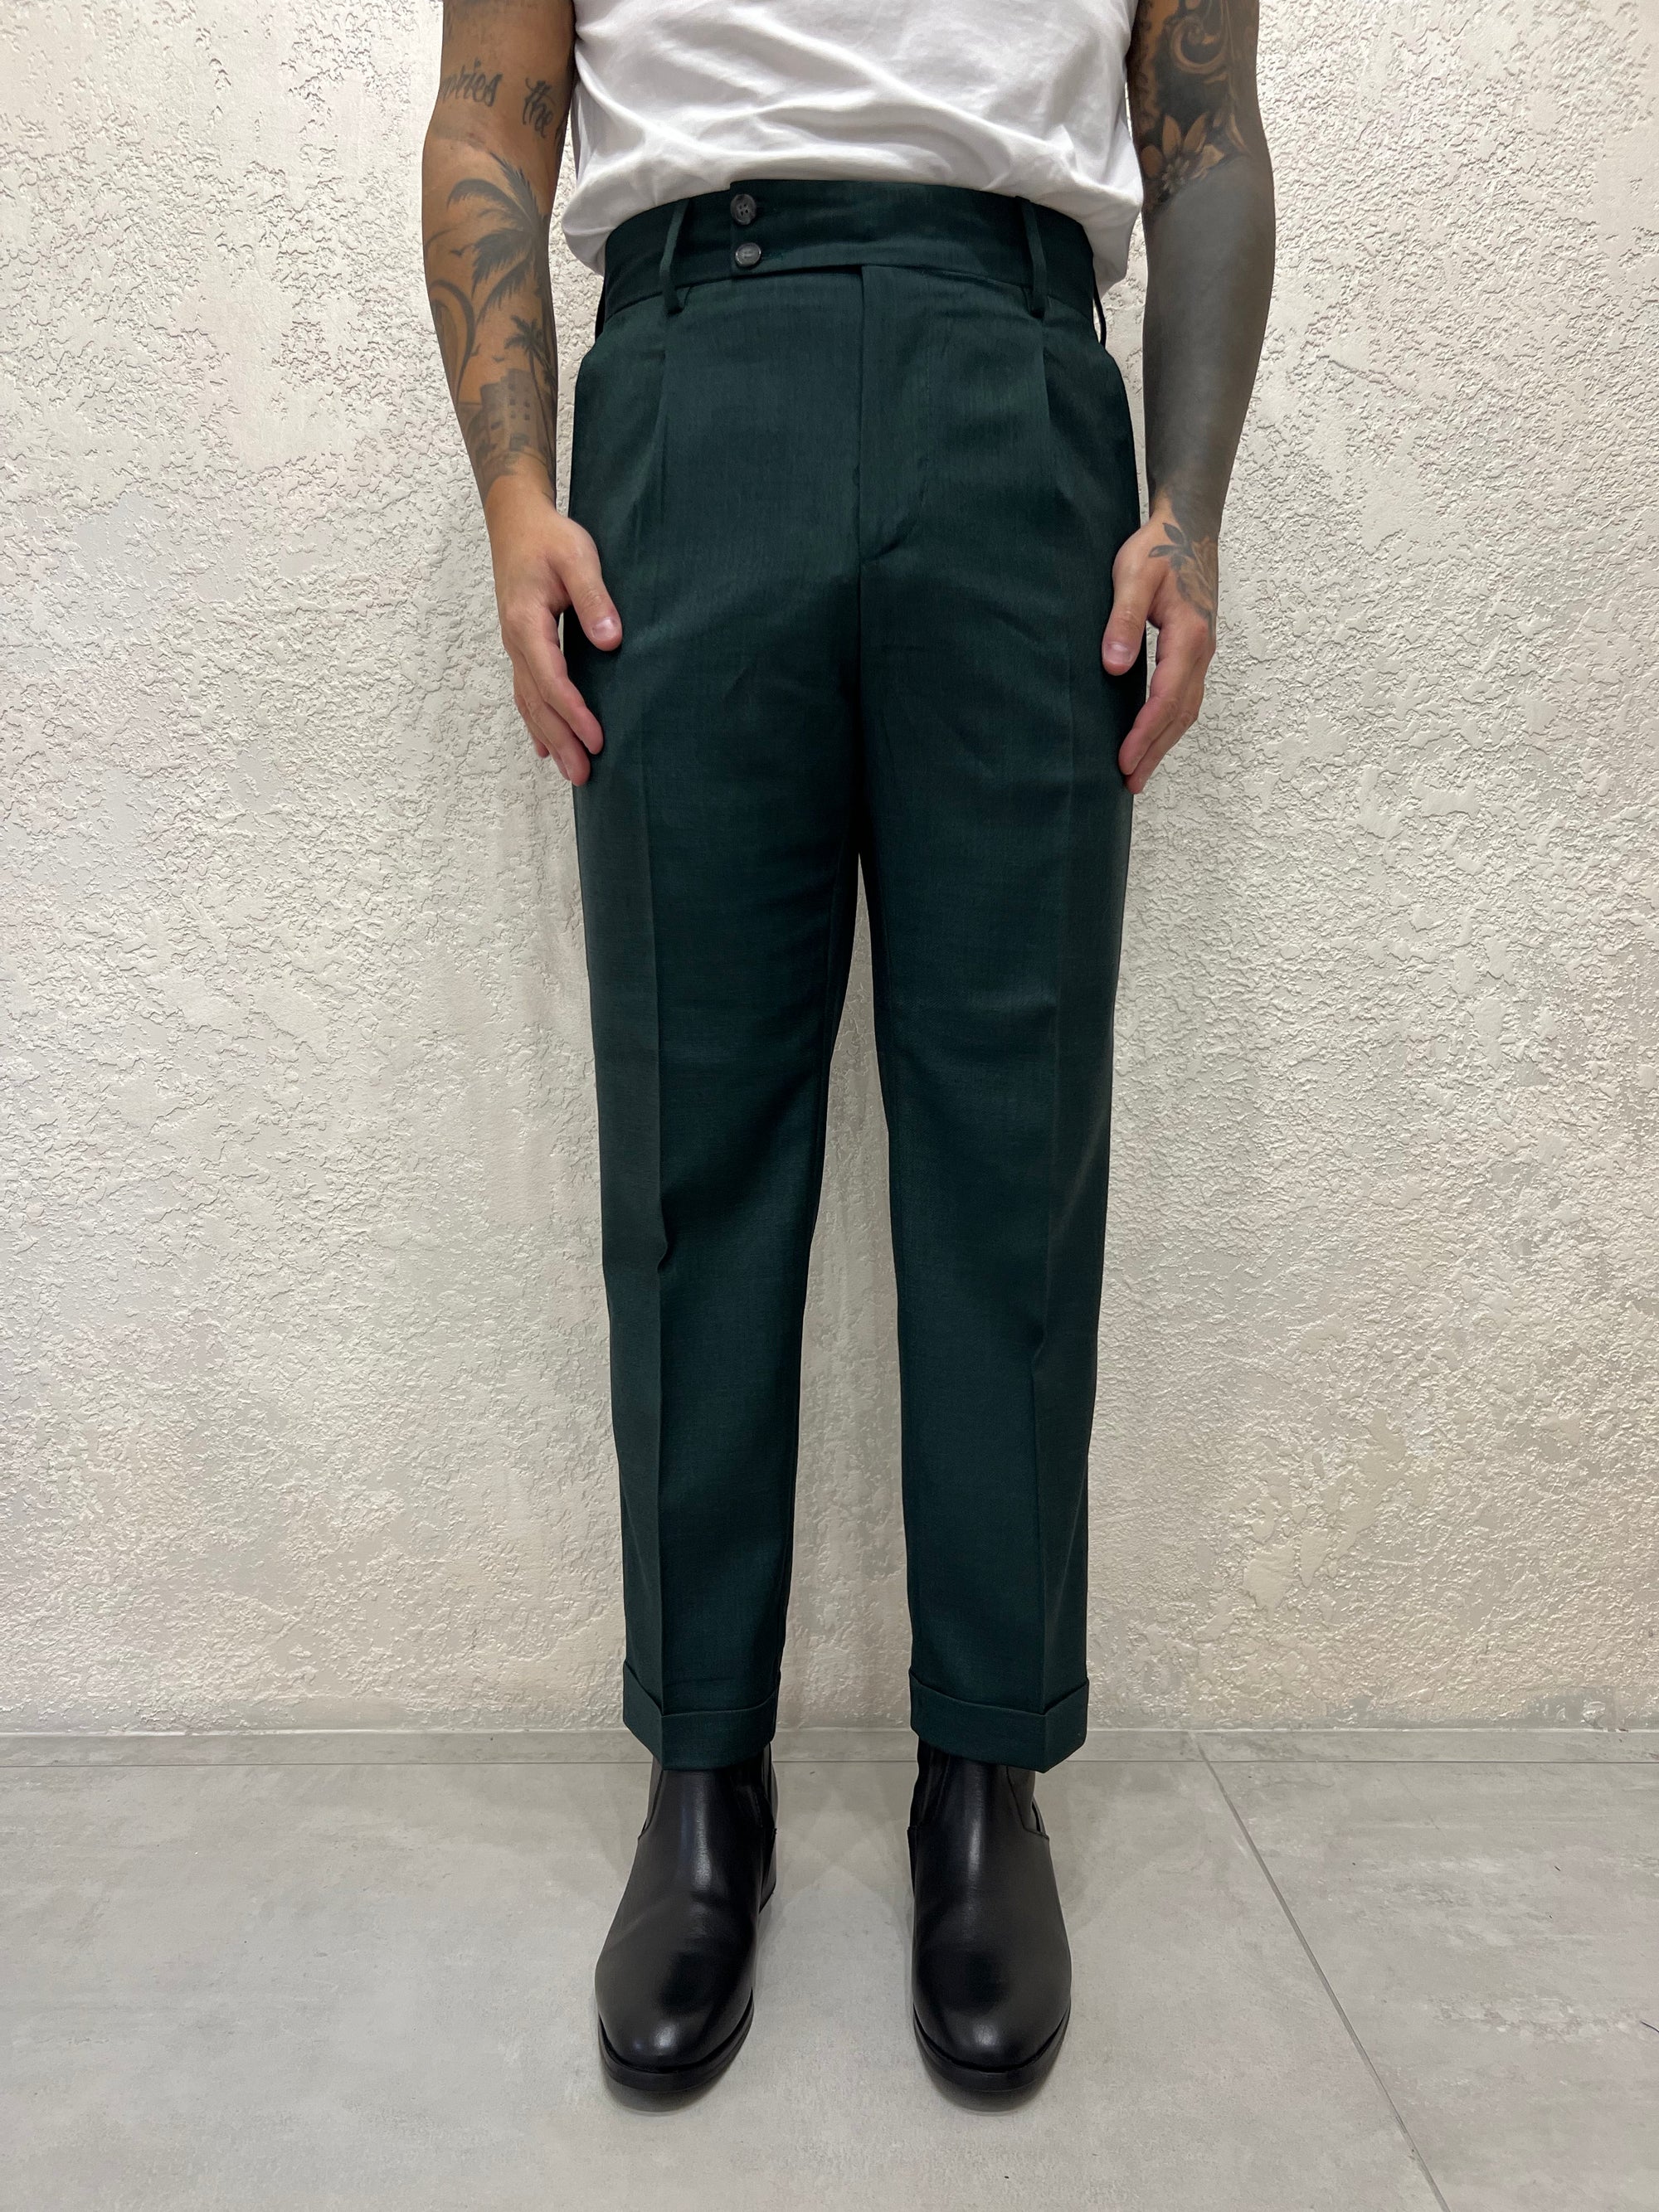 Pantalone Smith Tramato Verde